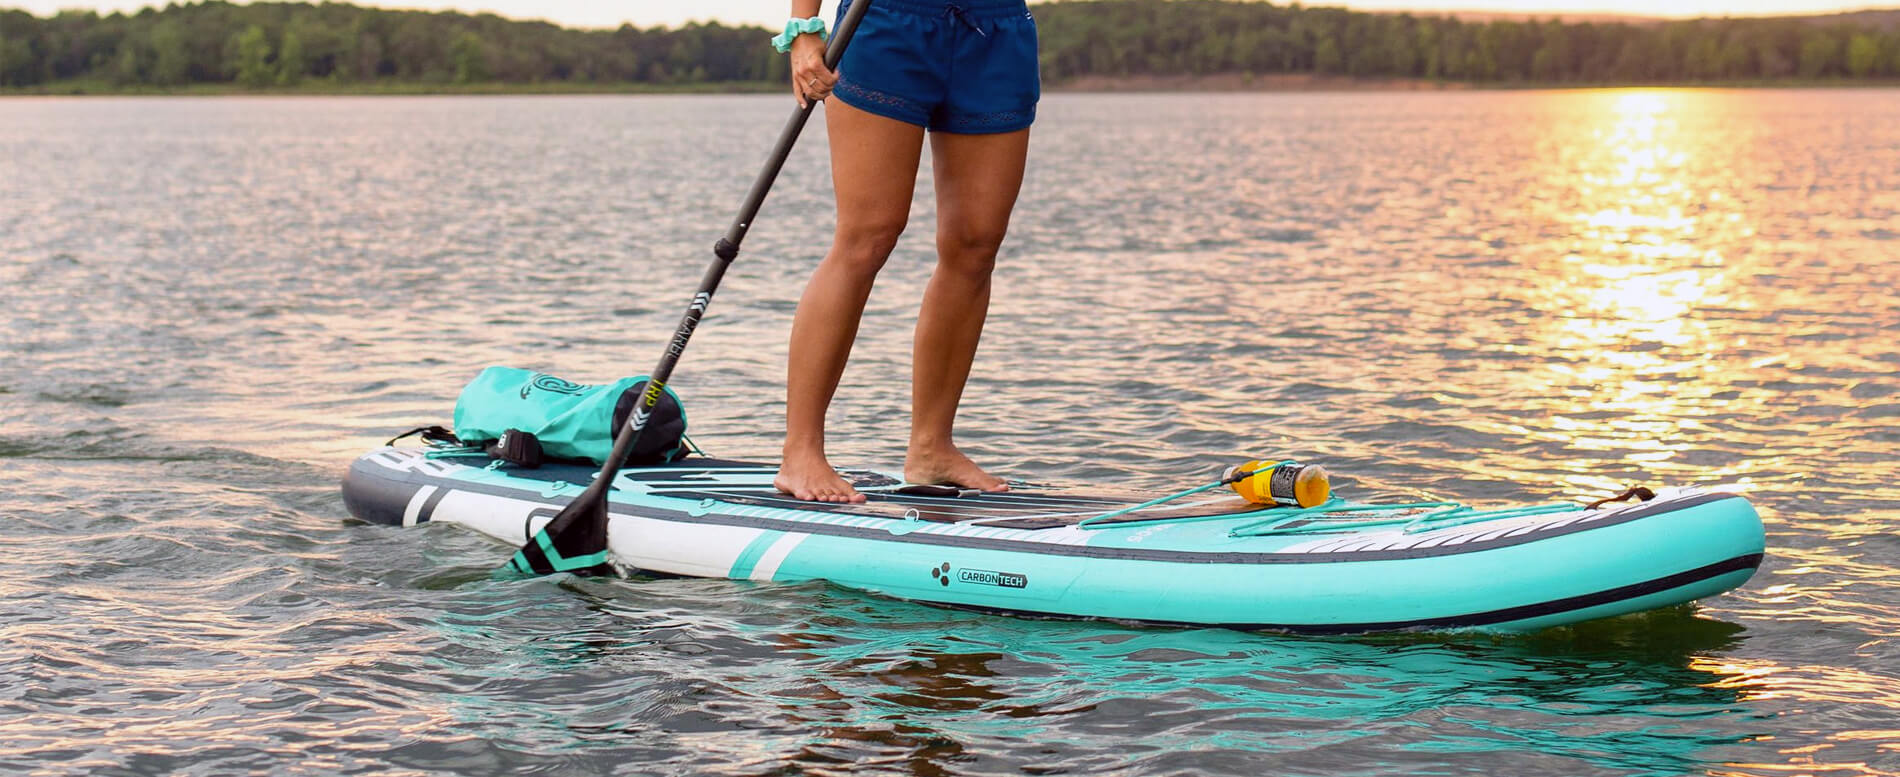 Woman paddle boarding on a lake